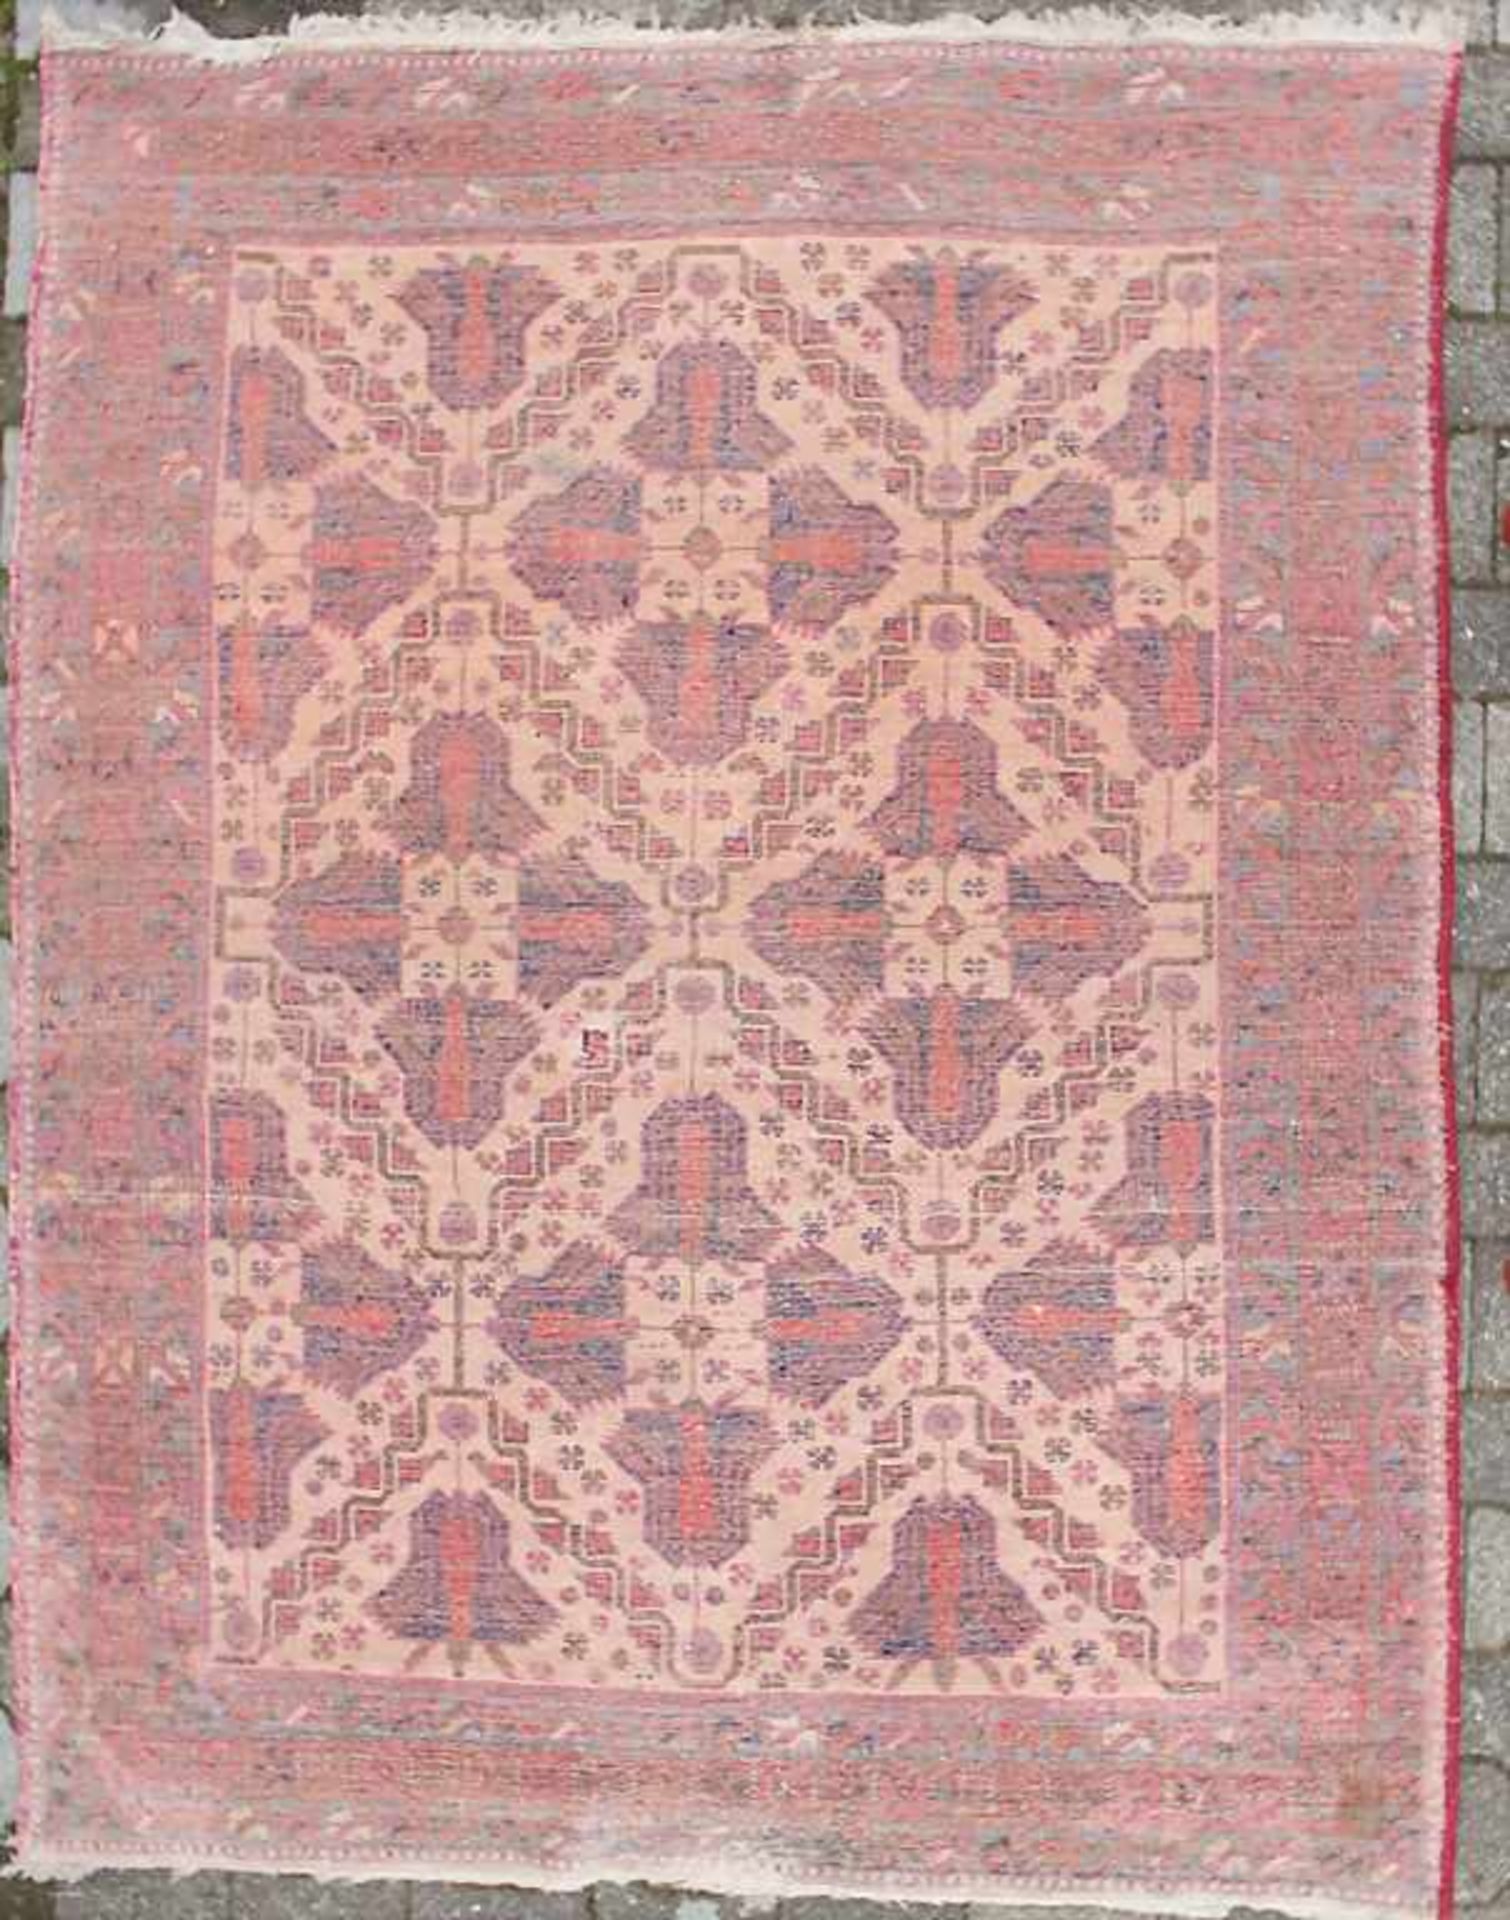 Teppich / A carpetMaterial: Wolle, Maße: 195 x 150 cm, Zustand: gut, partiell etwas betreten - Image 3 of 4